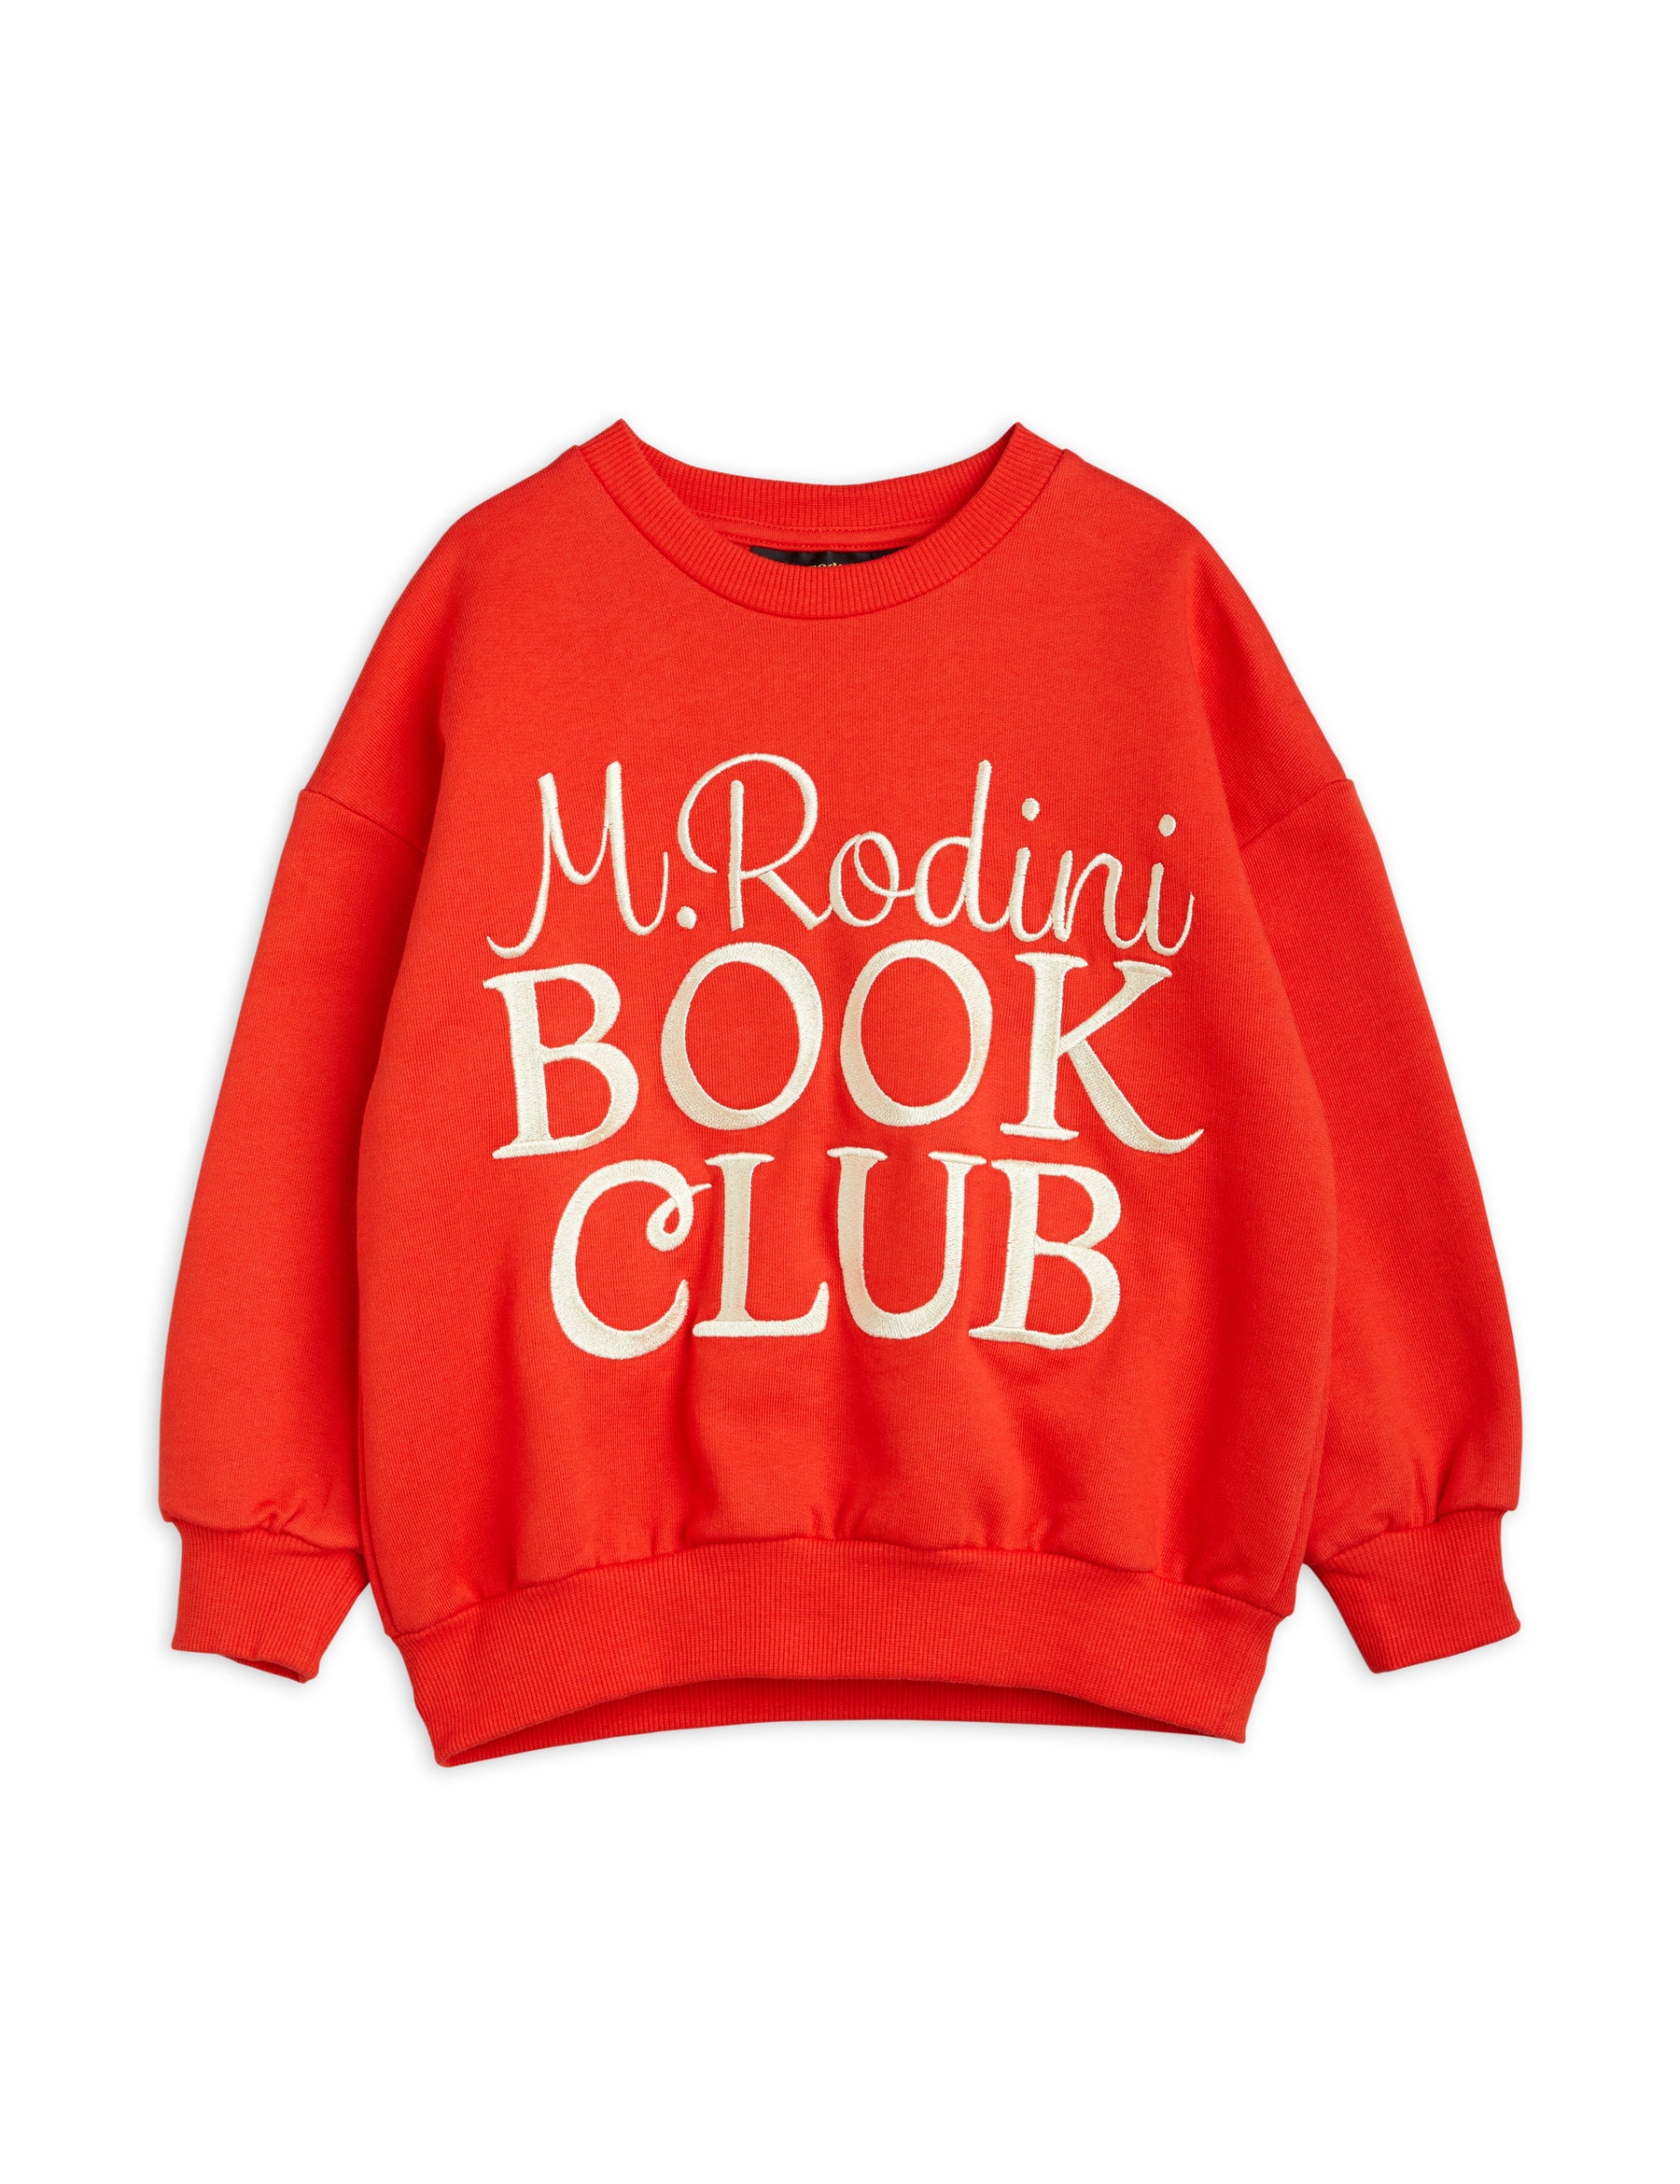 Book club sweatshirt Red